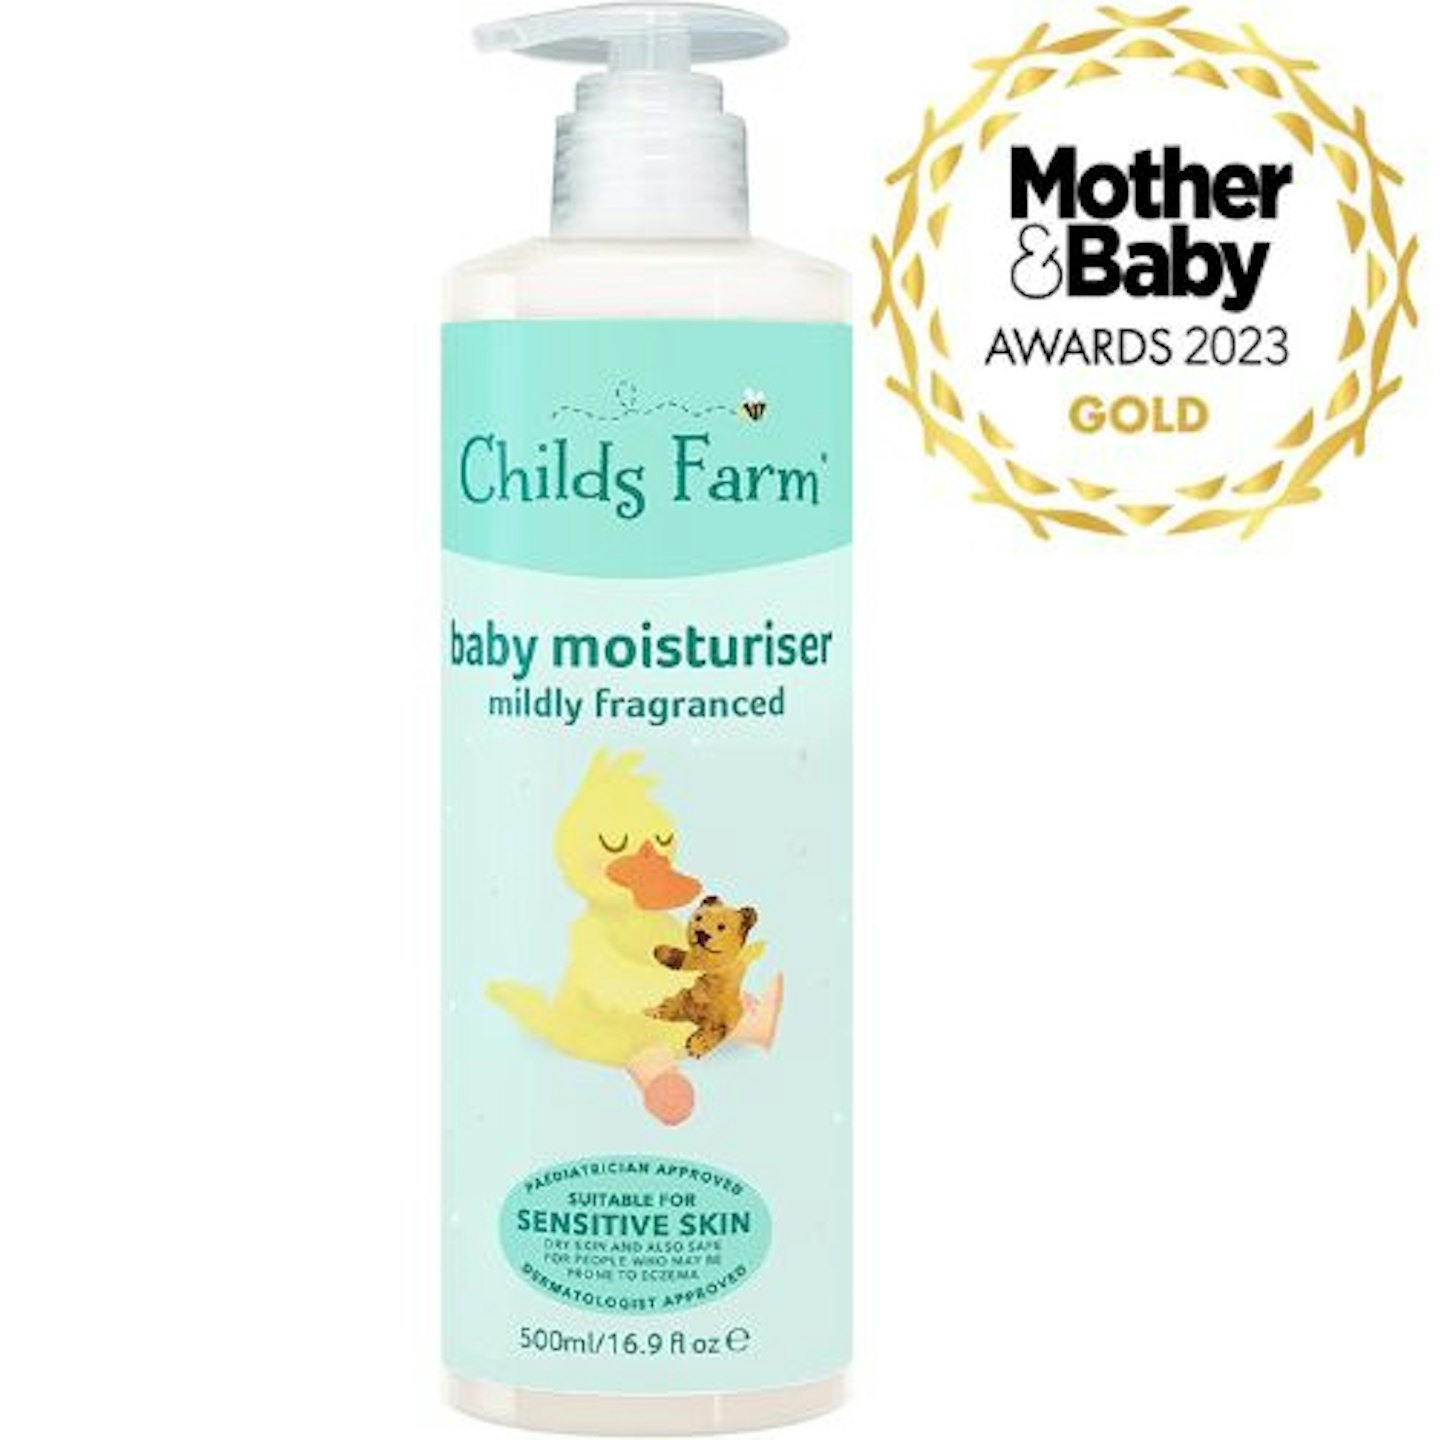 Childs Farm baby moisturiser, mildly fragranced